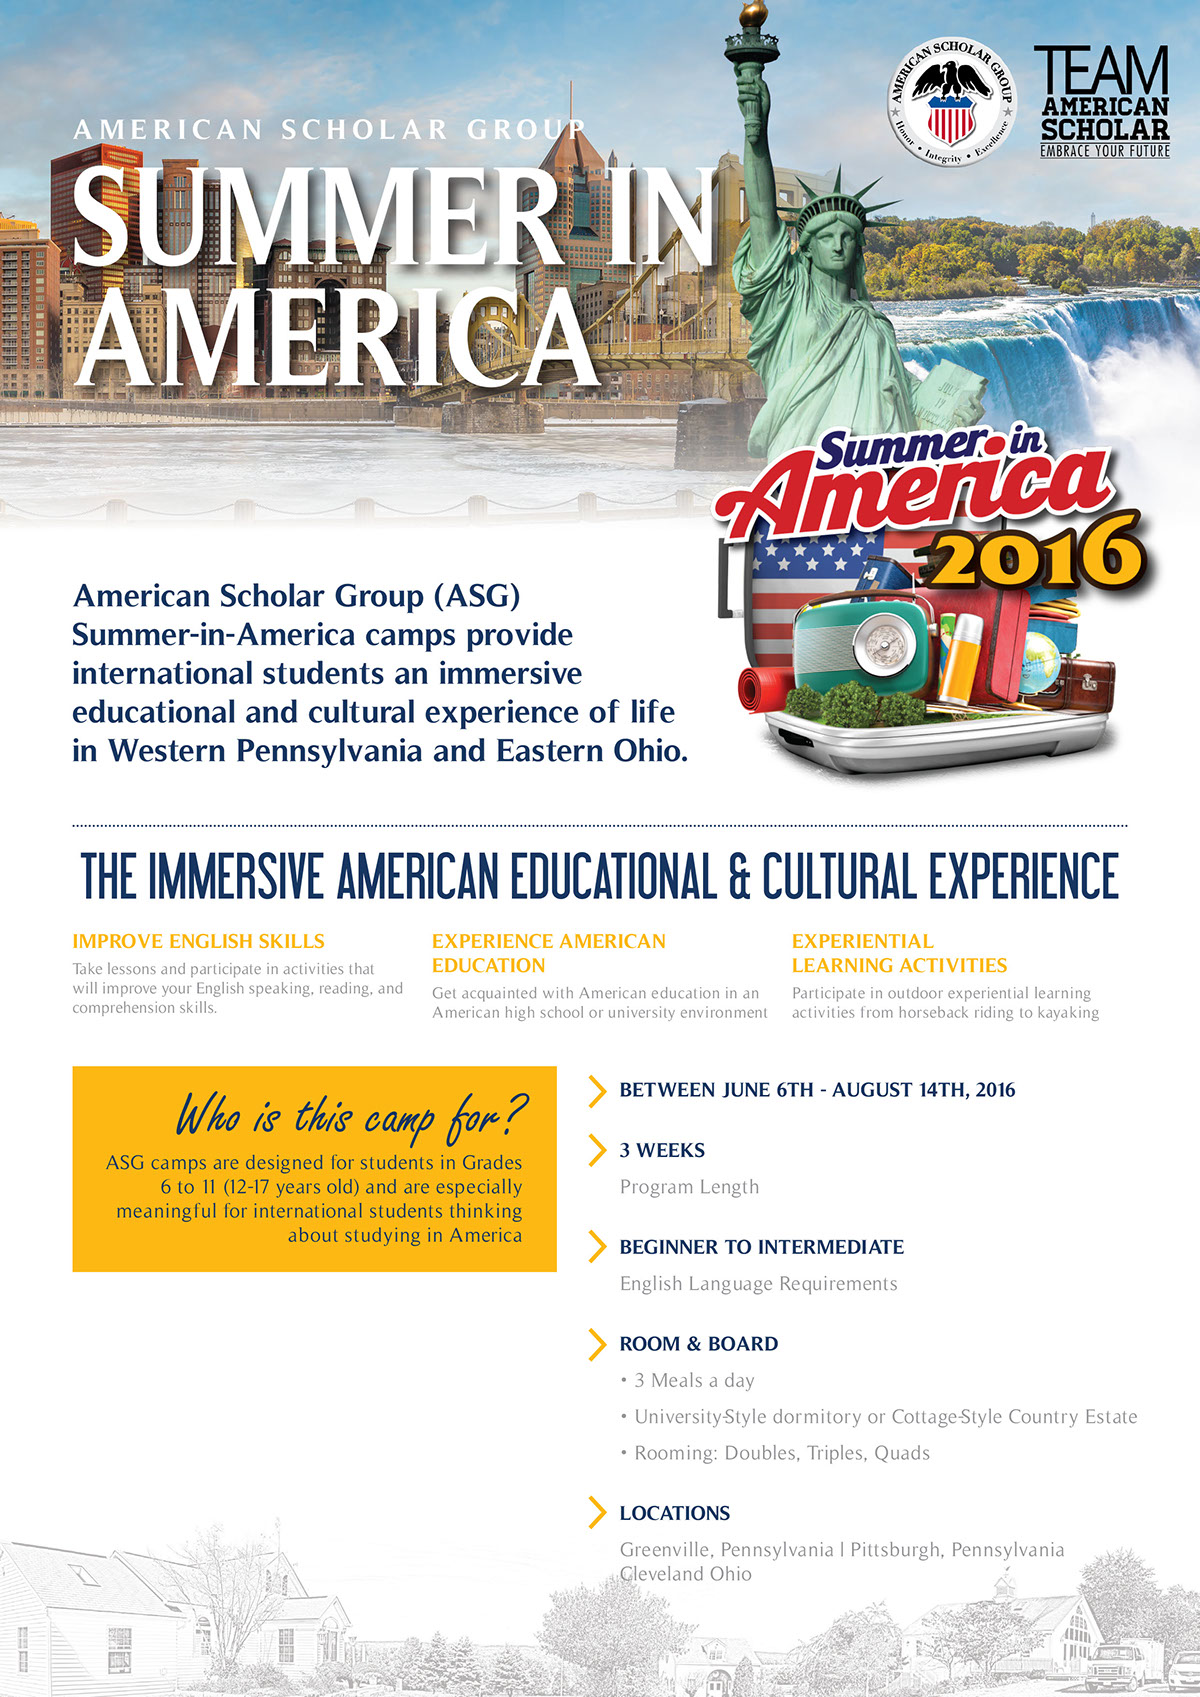 American Scholar Group Summer in America